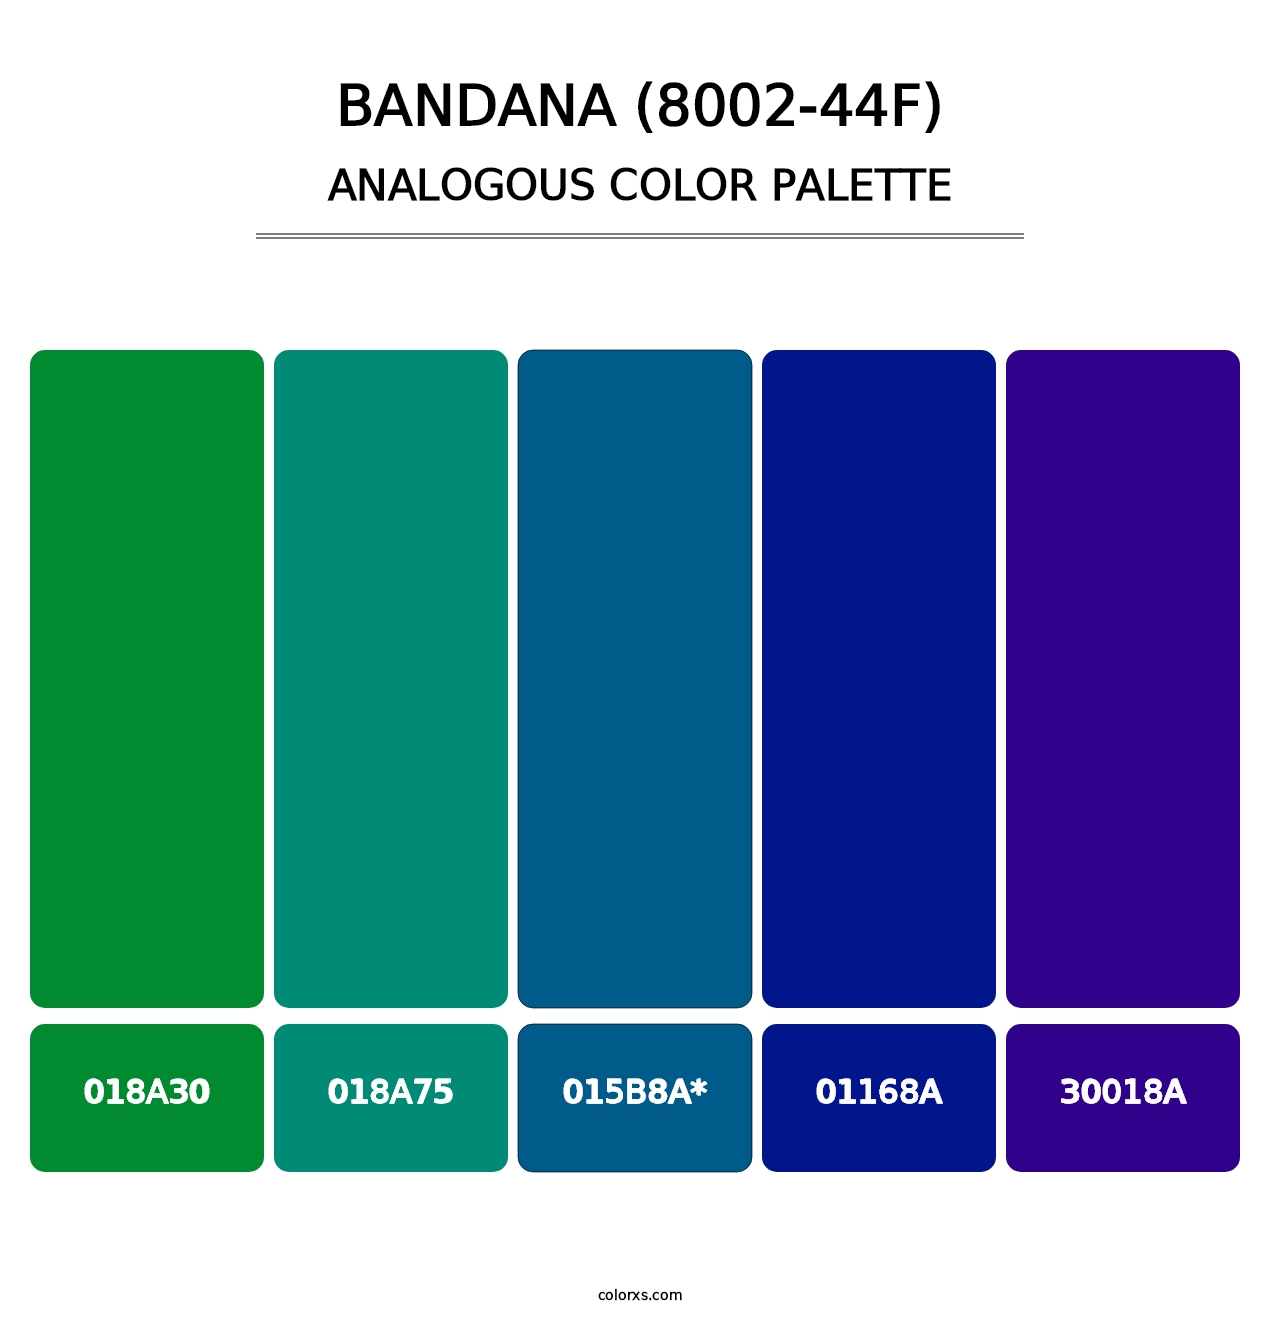 Bandana (8002-44F) - Analogous Color Palette